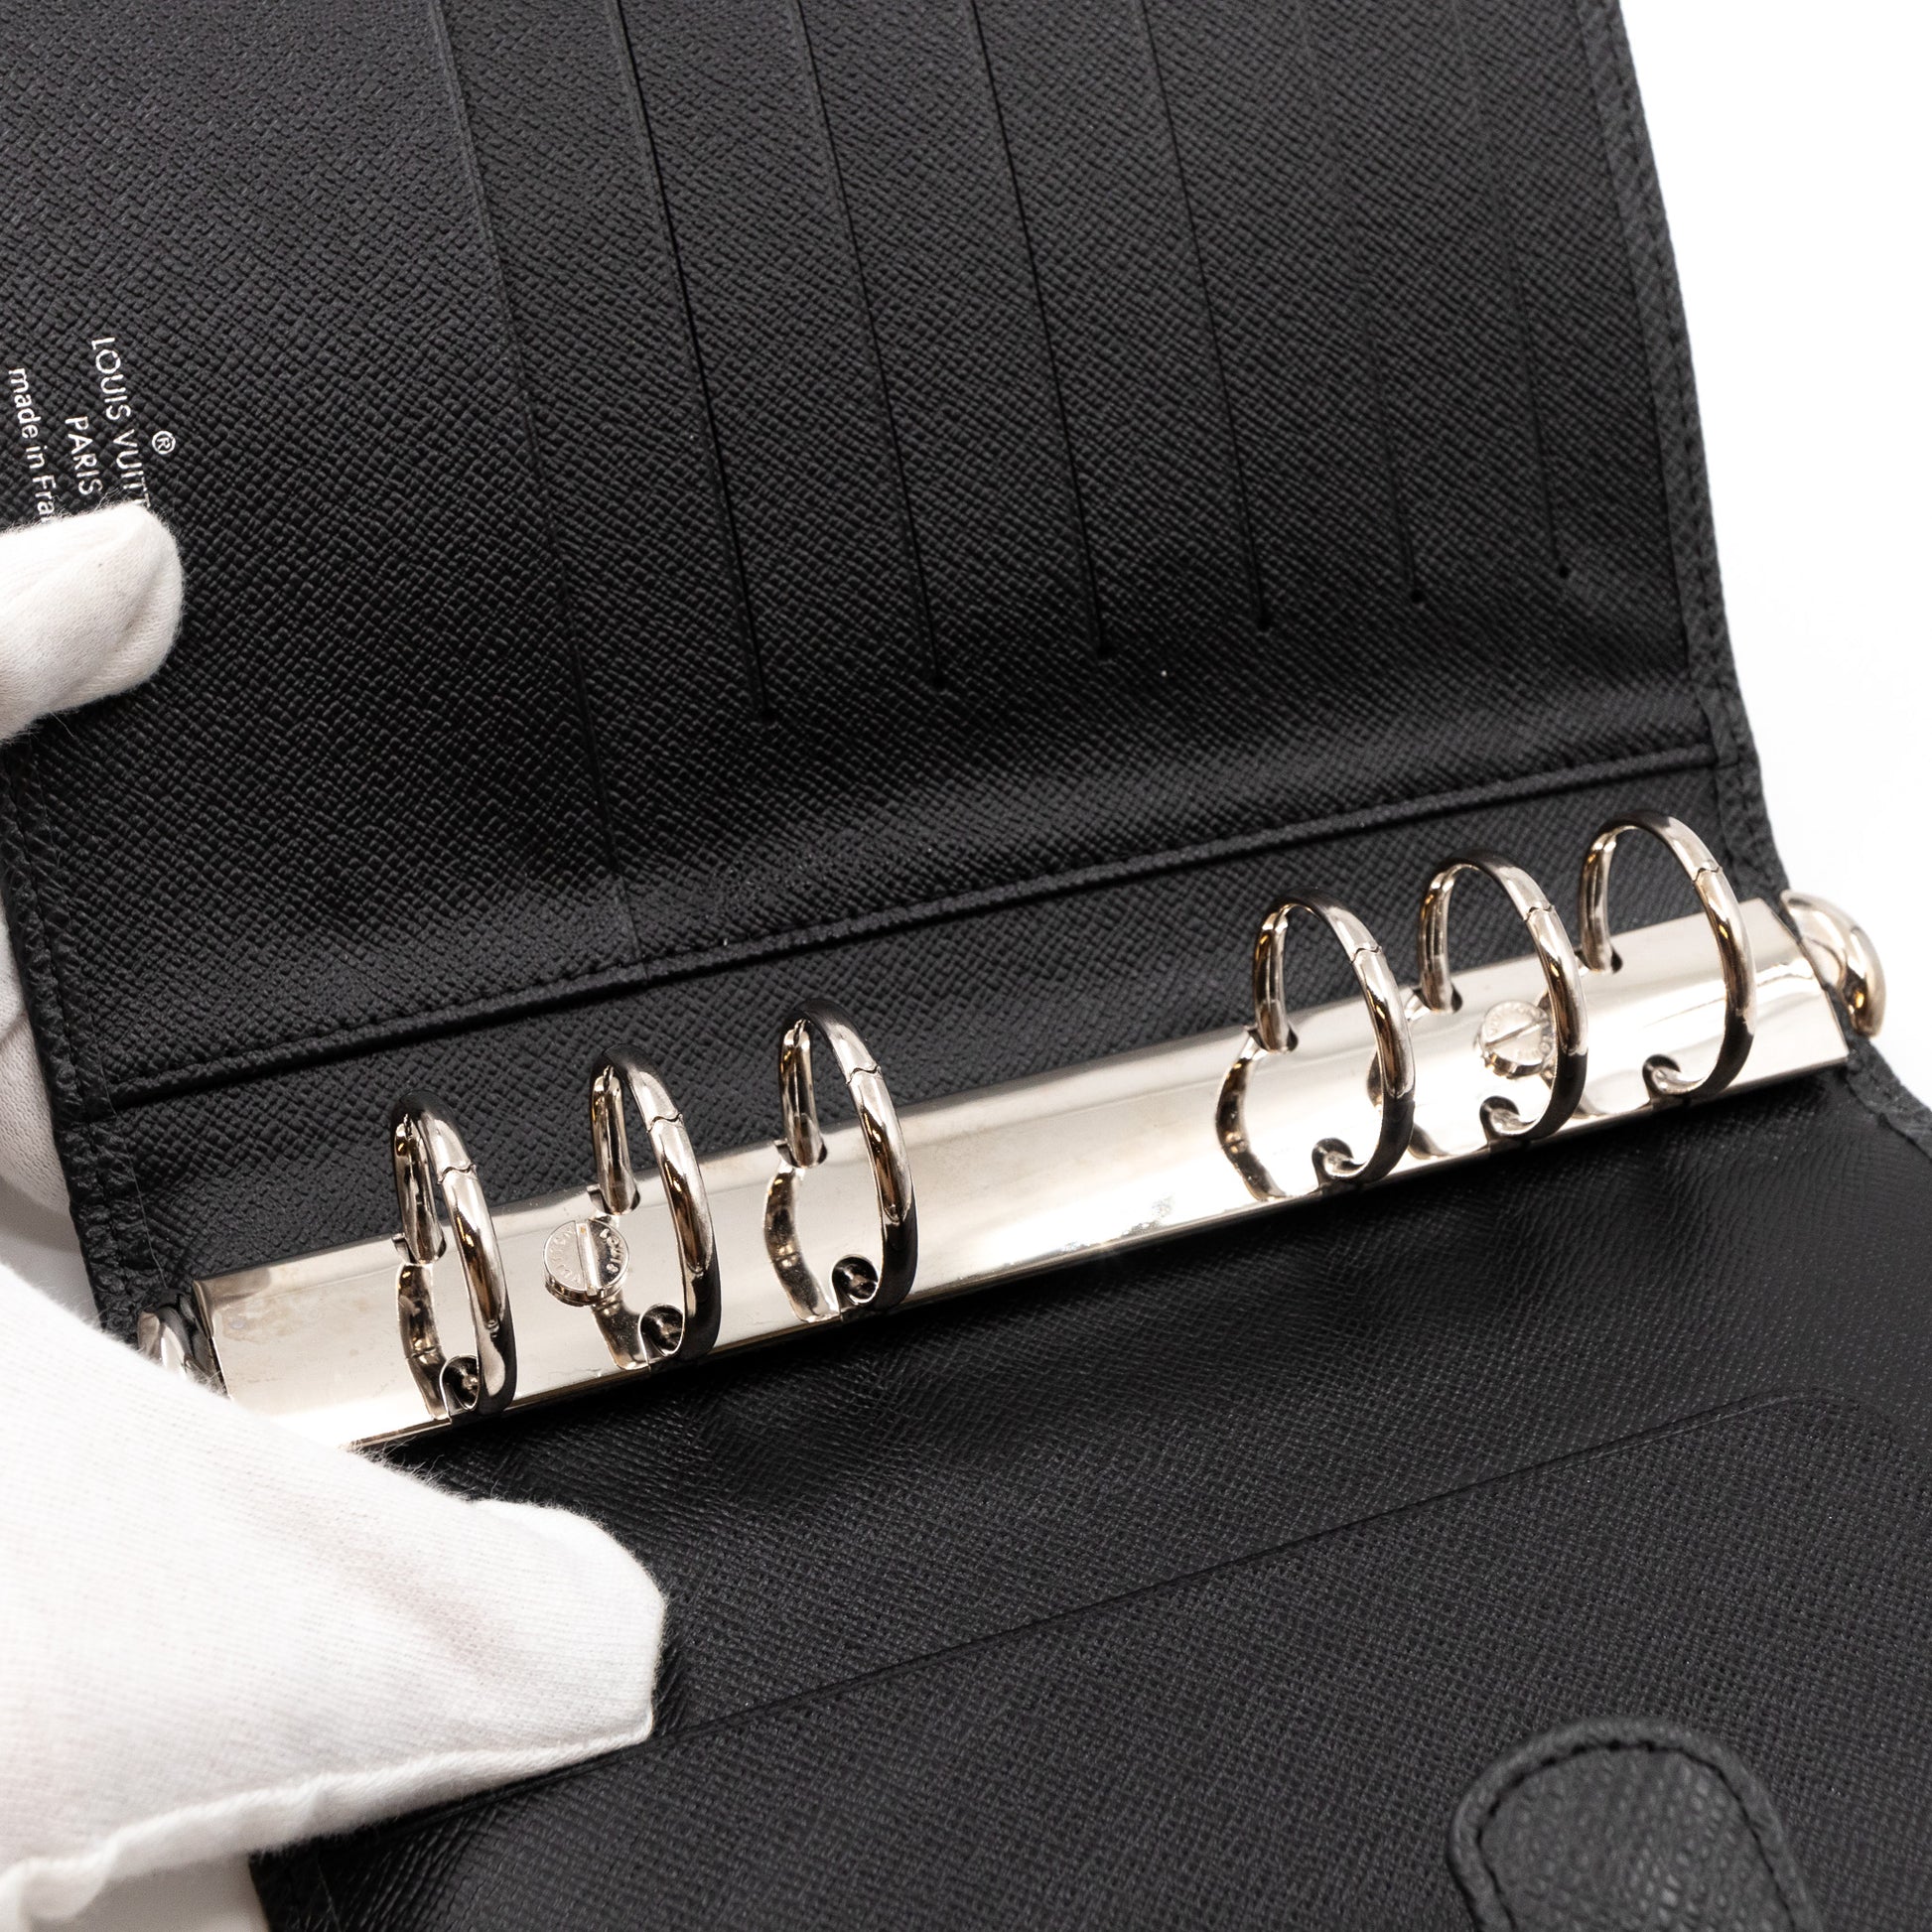 Louis Vuitton Bordeaux Taiga Leather Medium Ring Diary Cover Agenda mm 872897